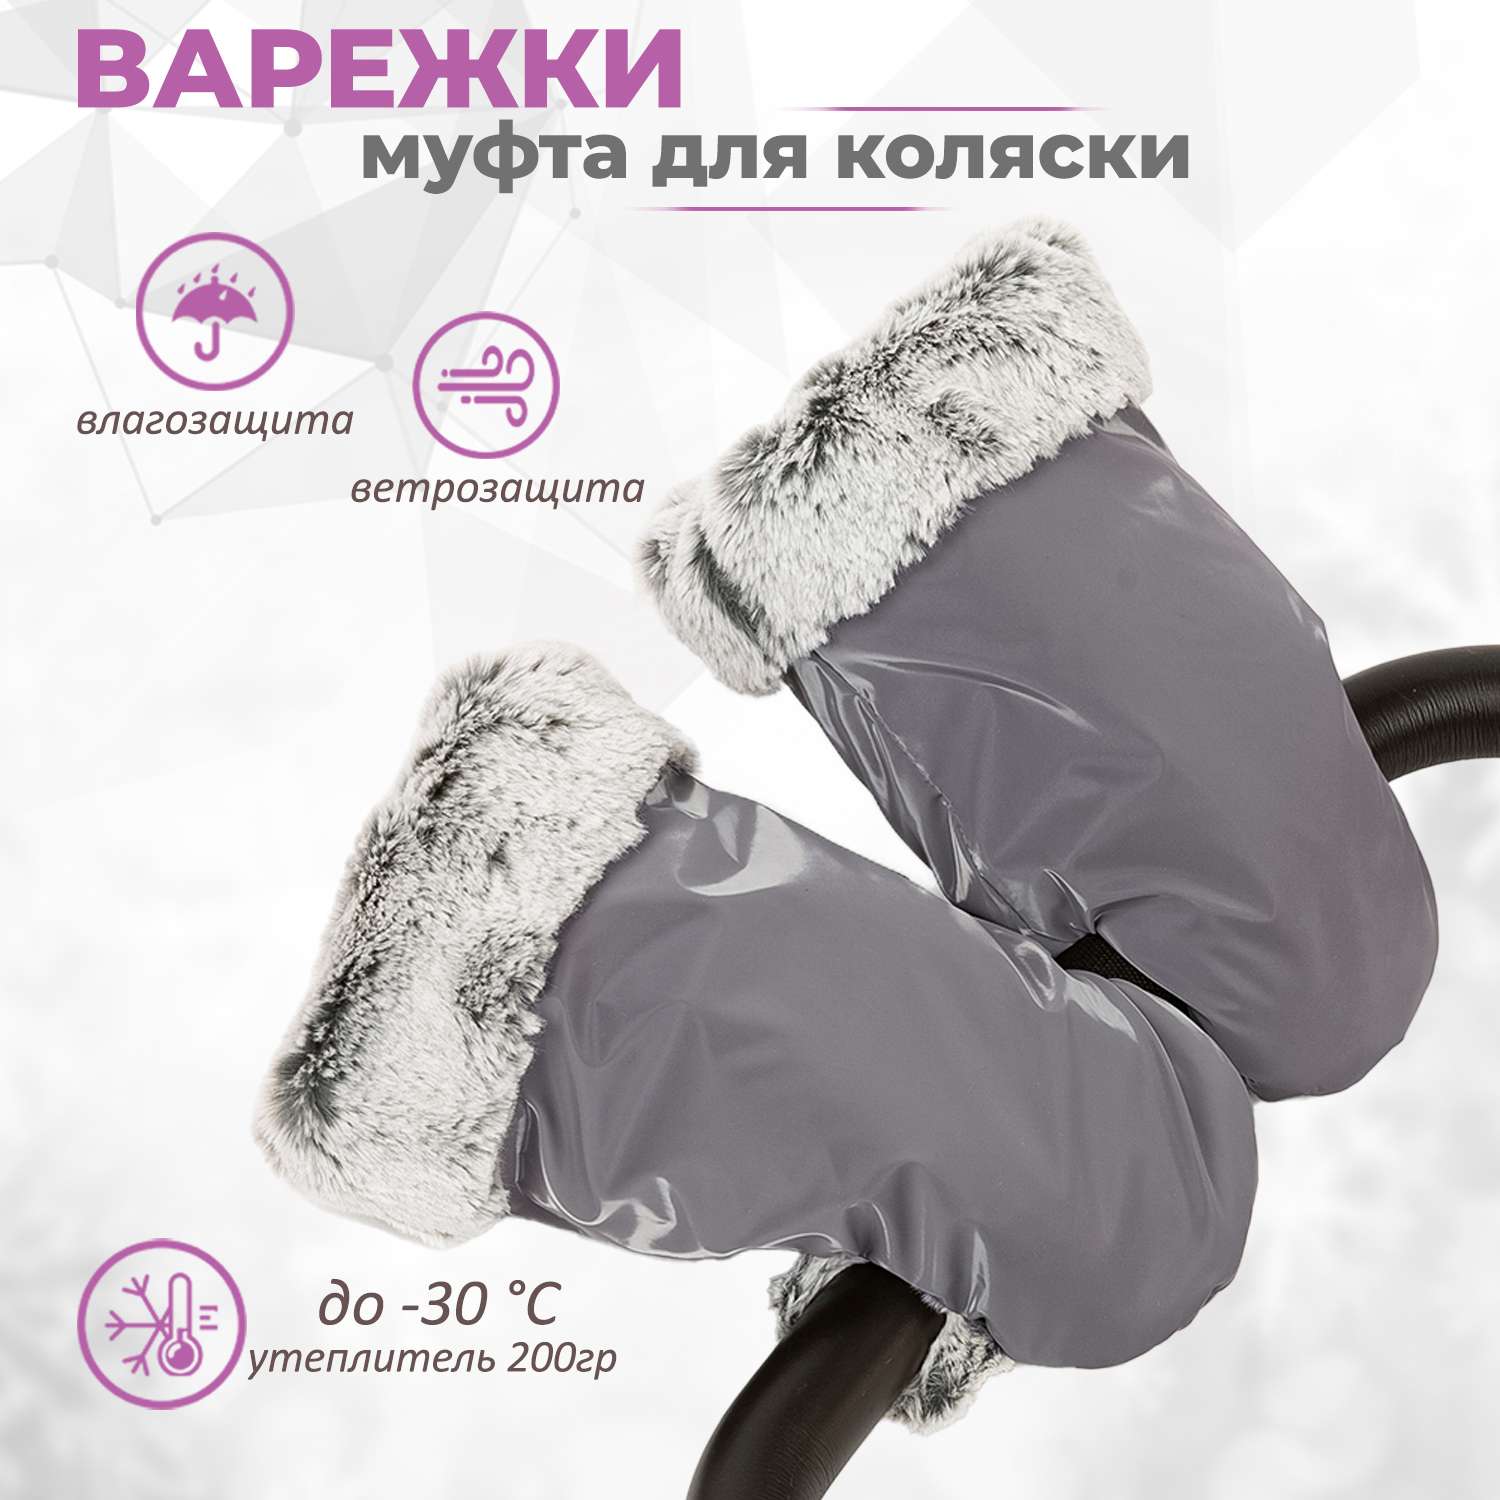 Муфта-рукавички для коляски inlovery Lakke/дымчатый МРЛ01-001 - фото 1